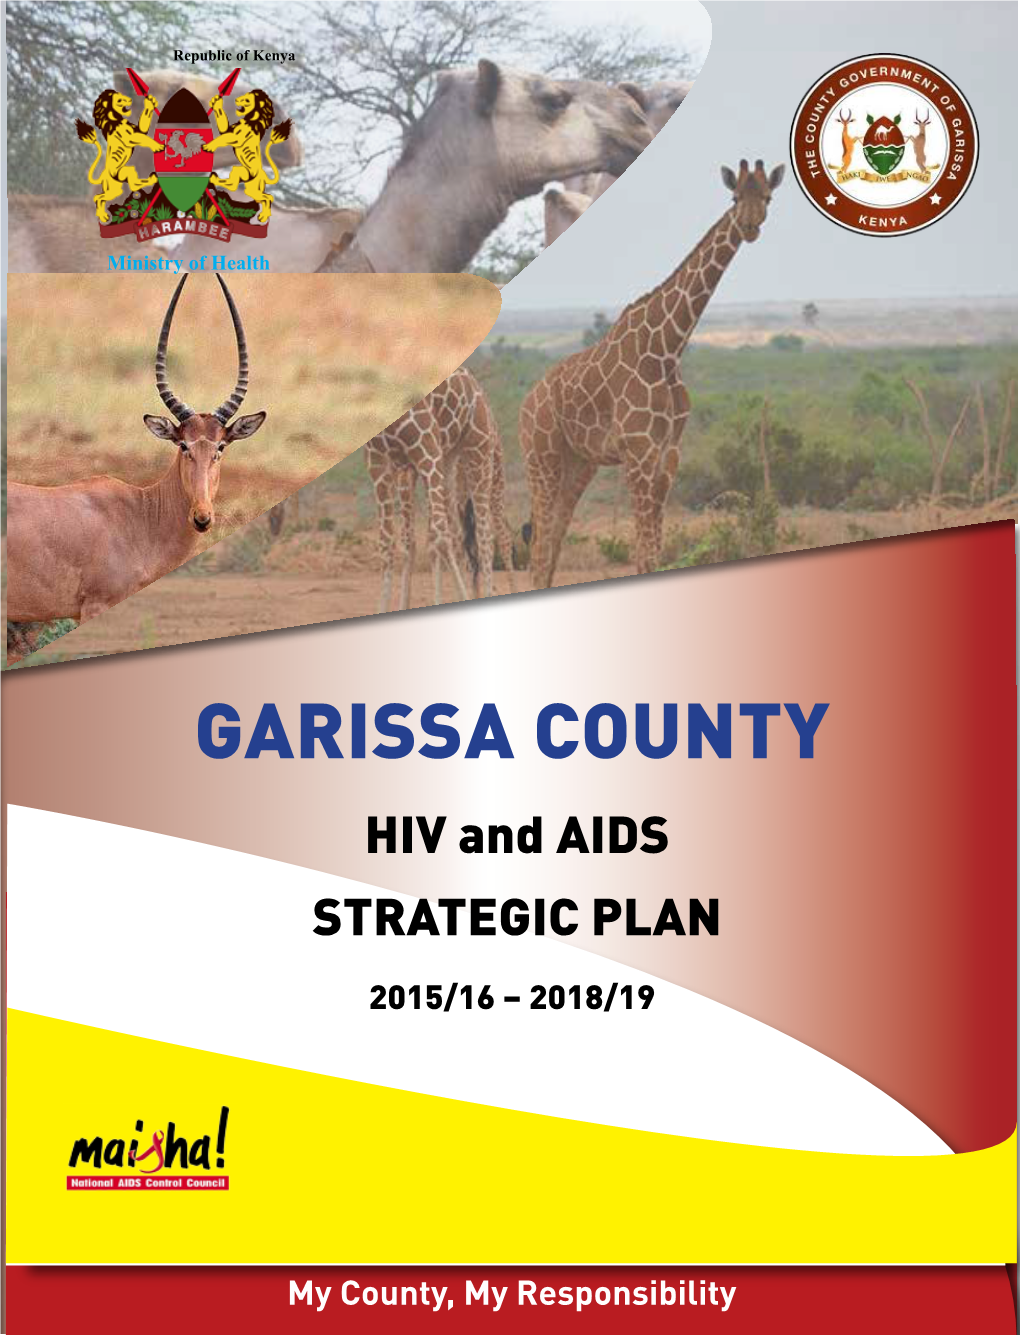 GARISSA COUNTY HIV and AIDS STRATEGIC PLAN